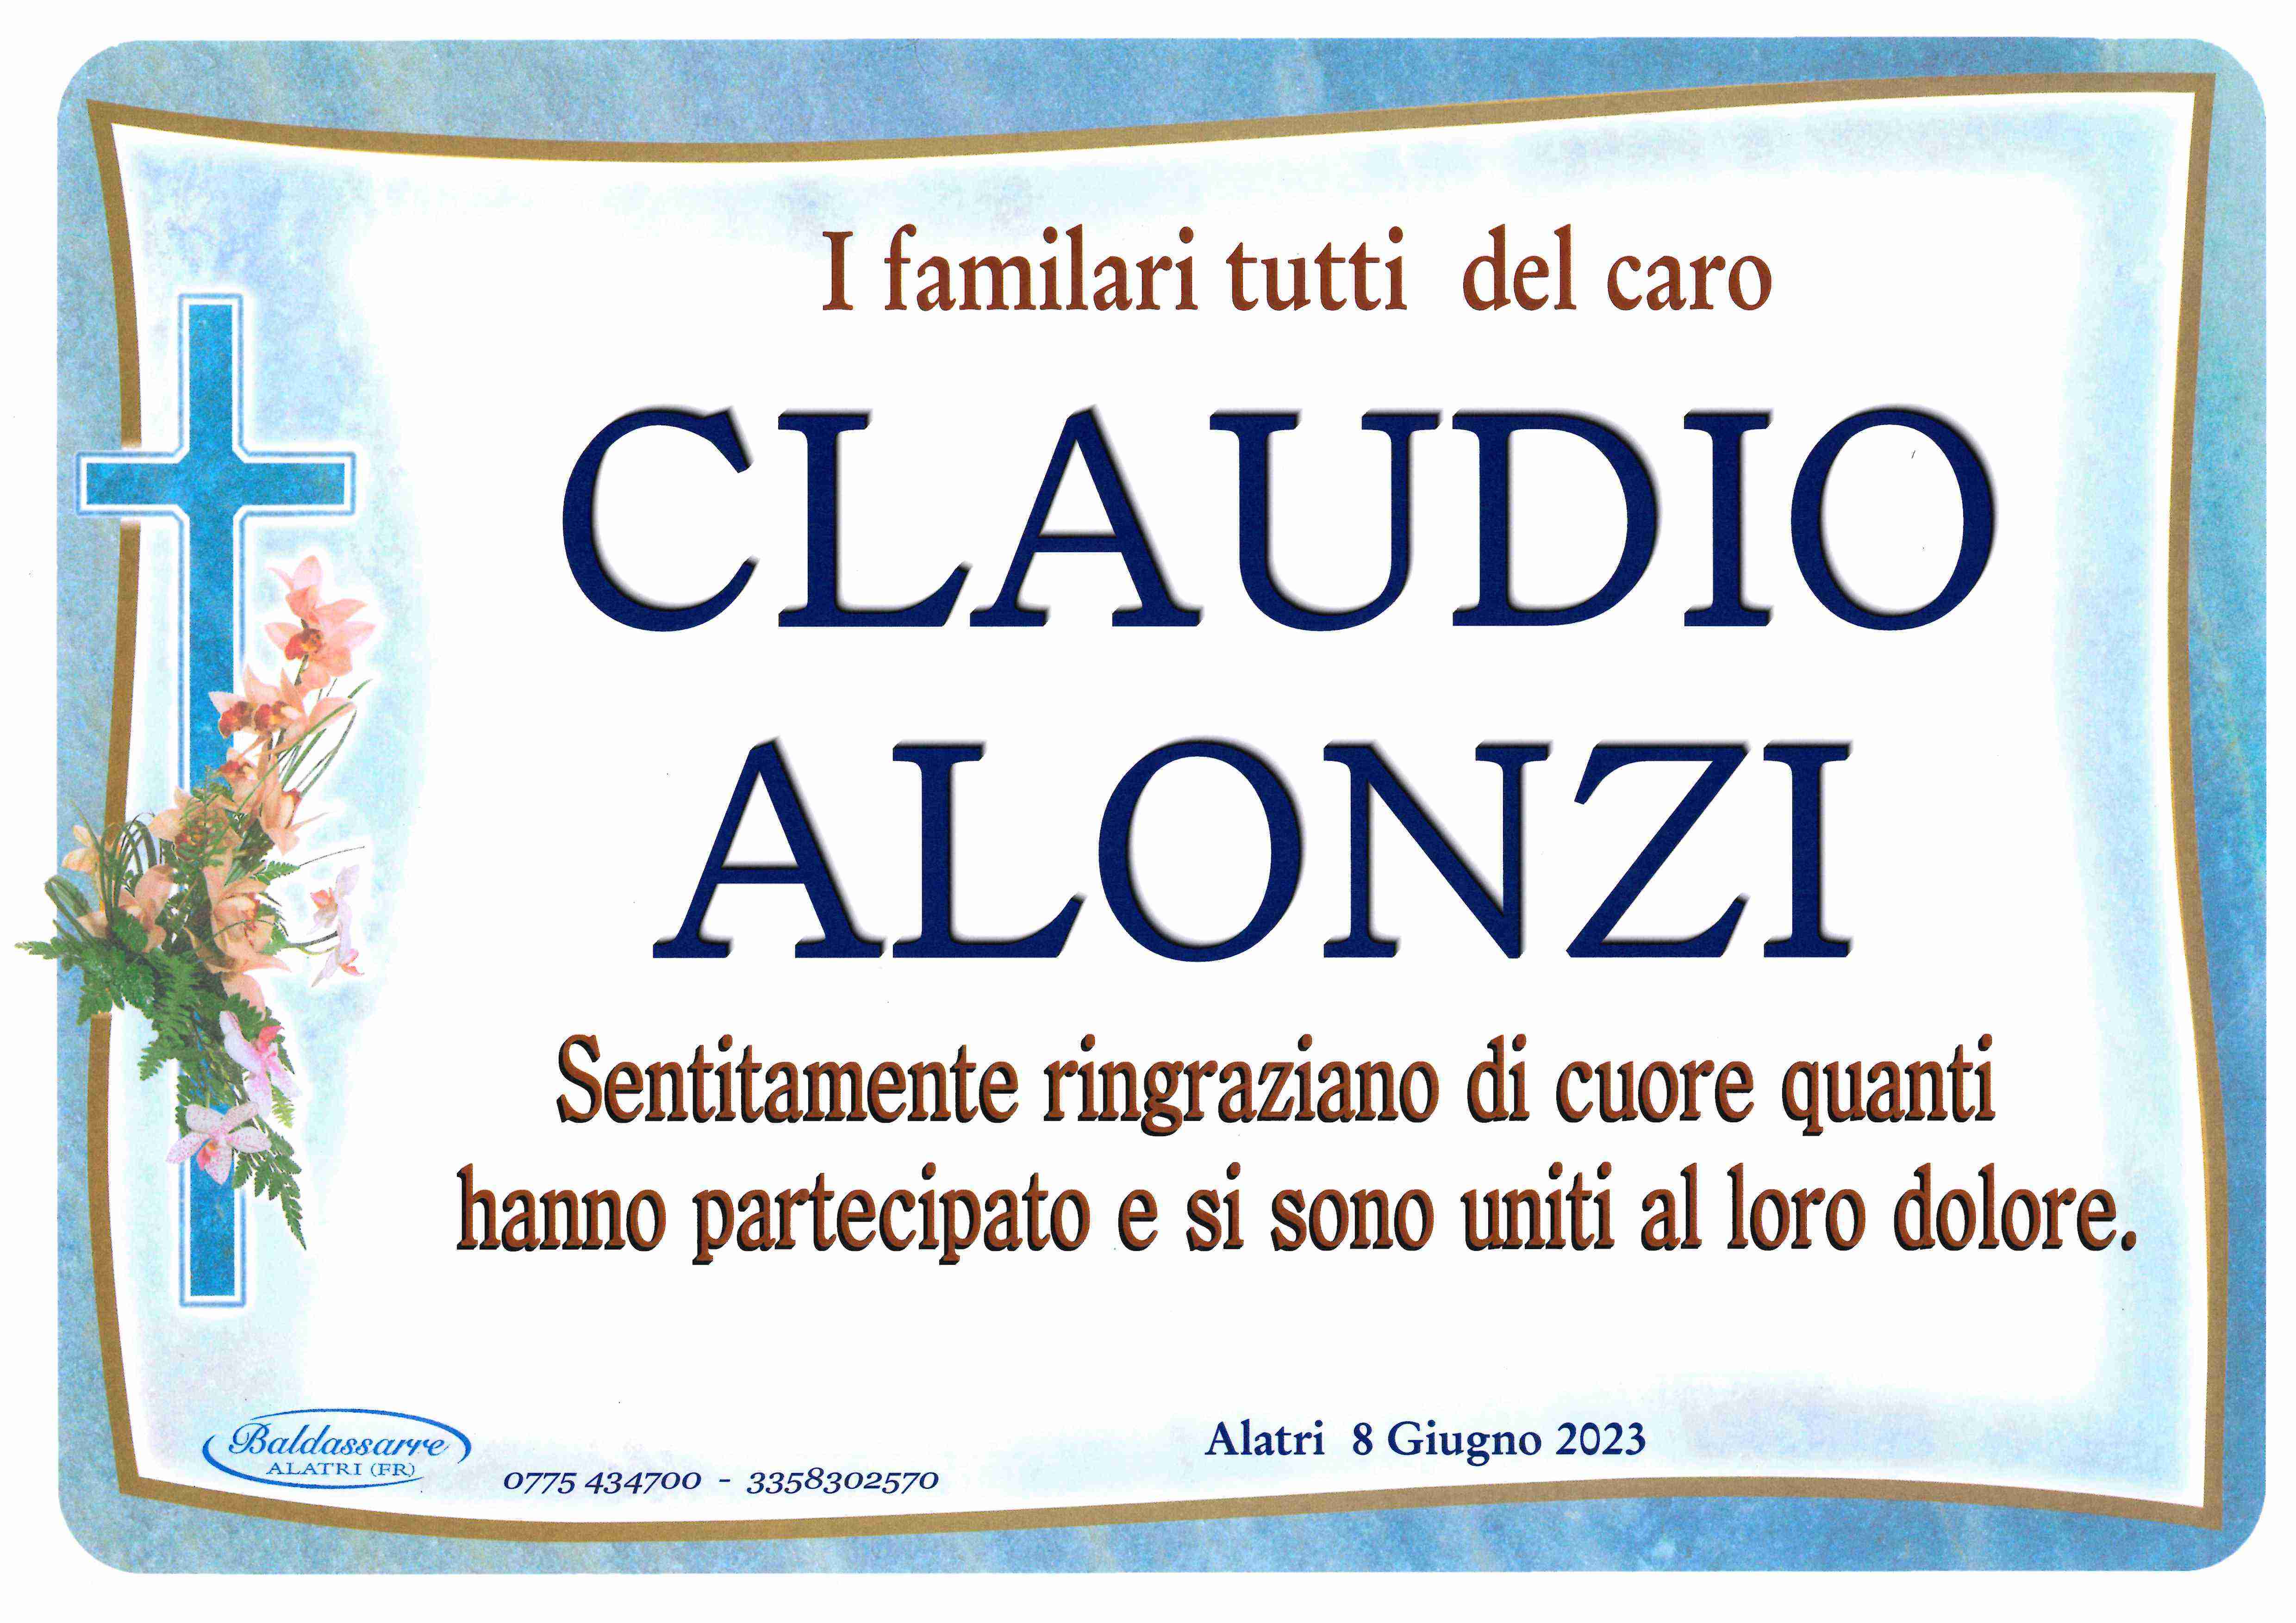 Claudio Alonzi